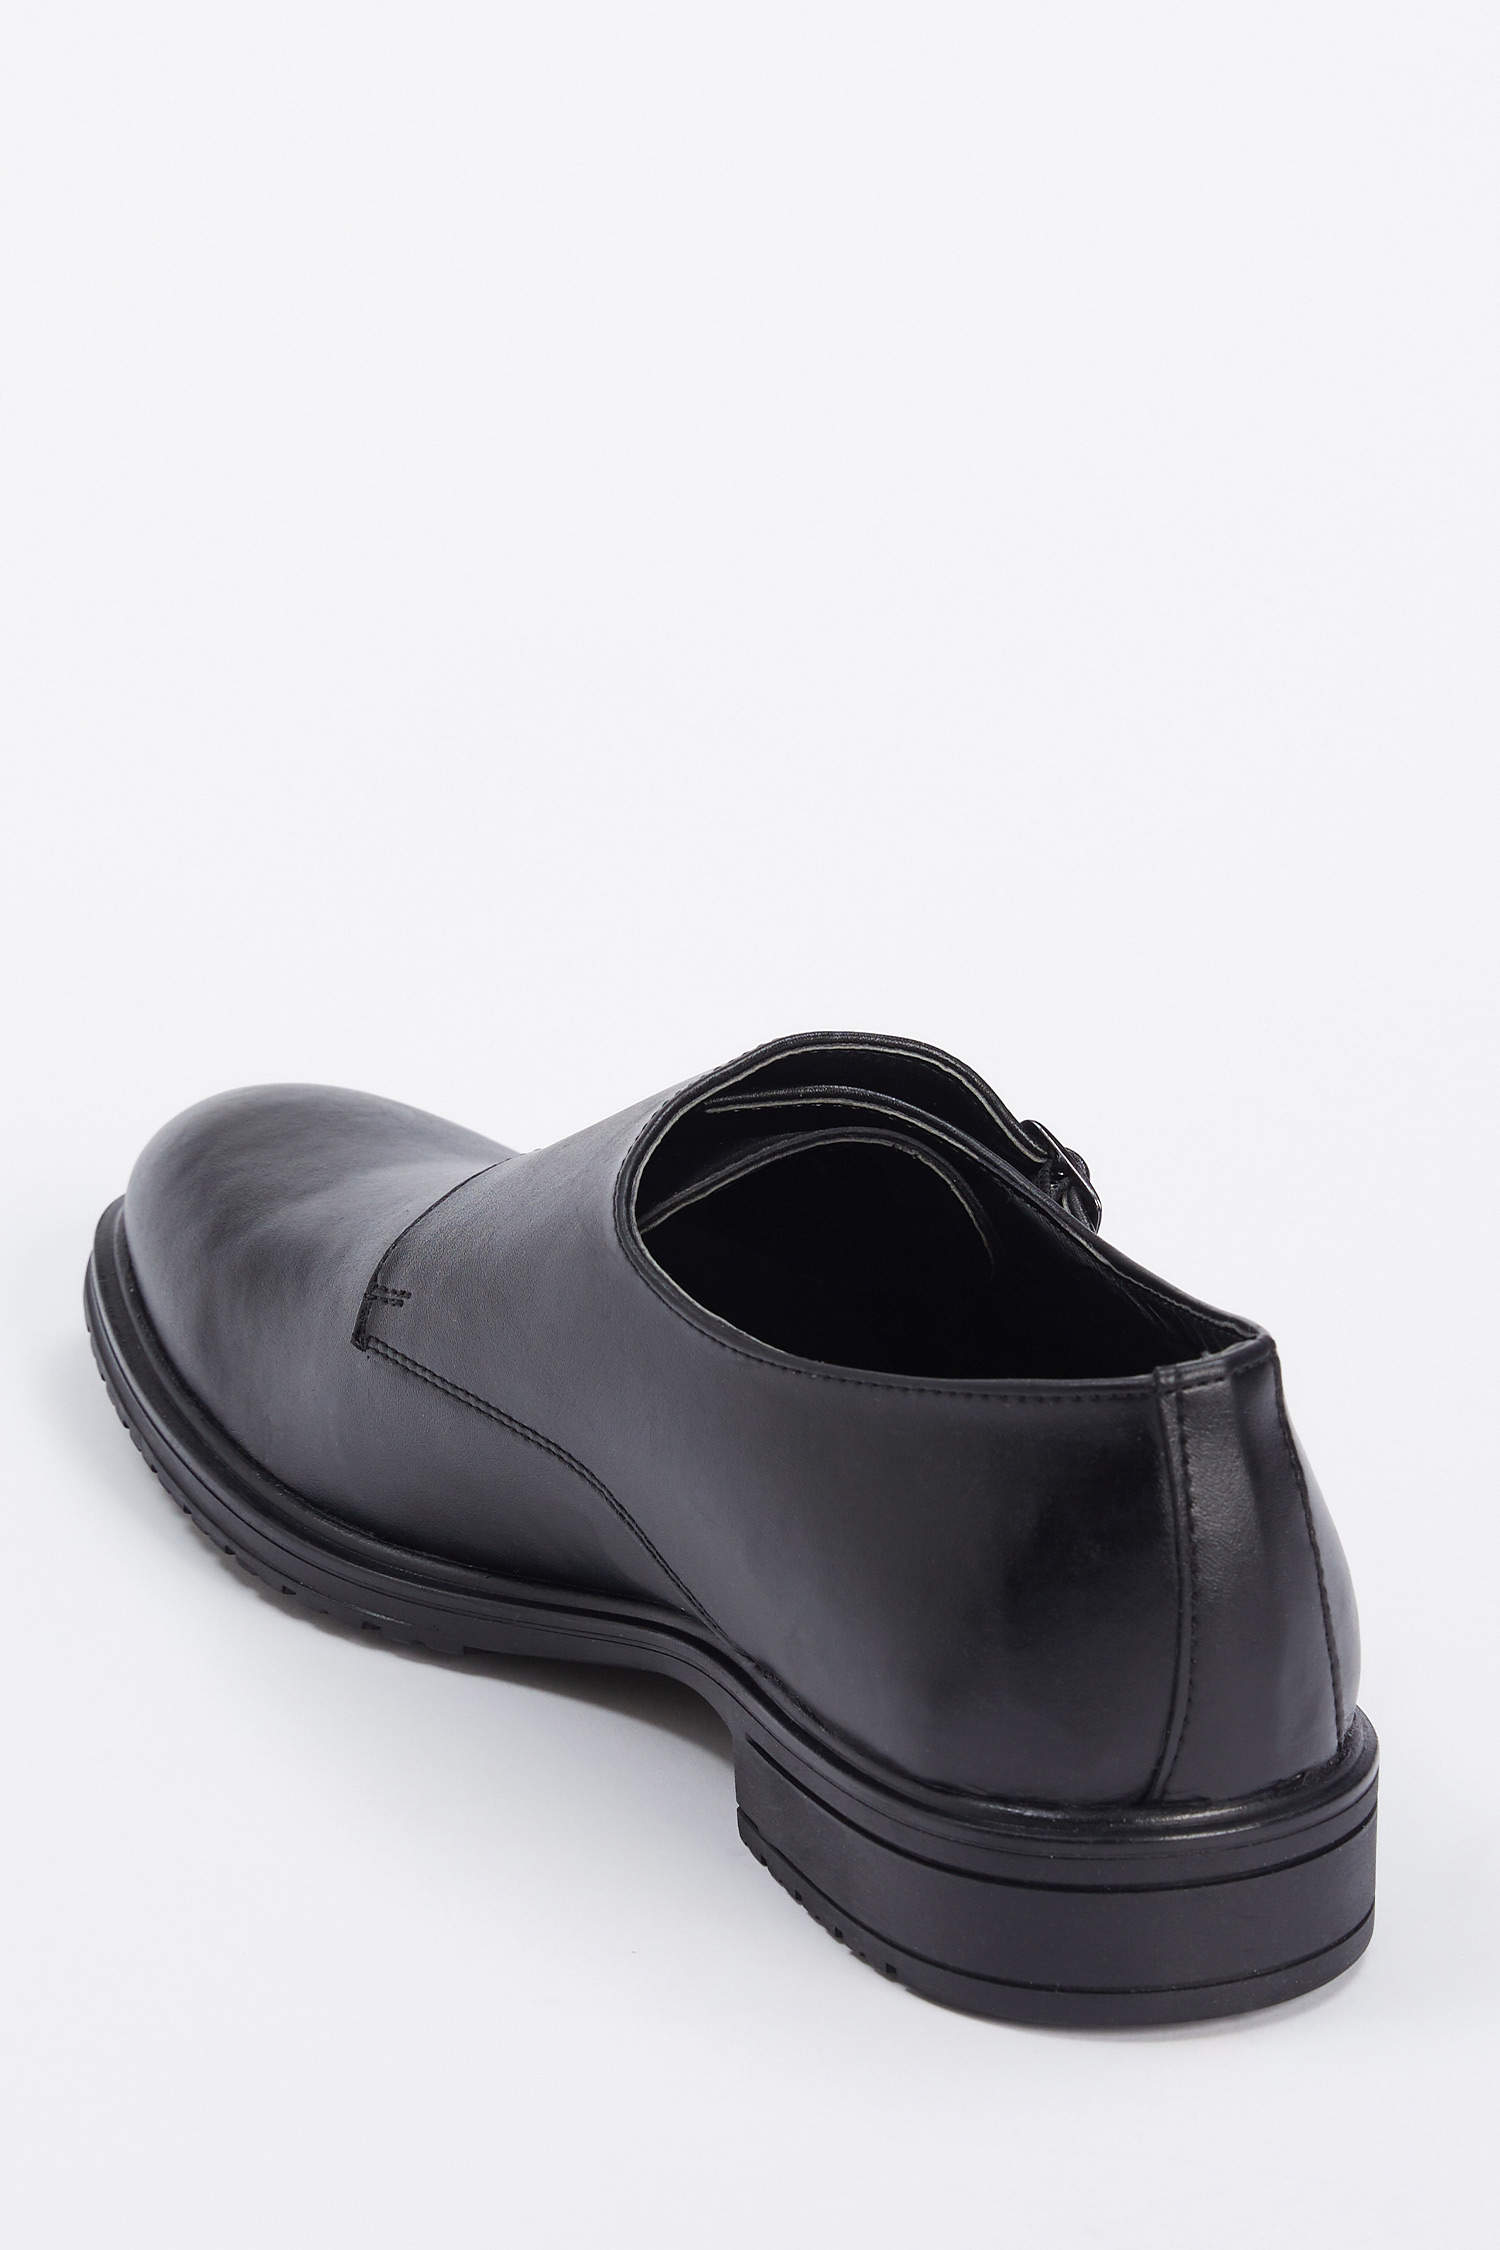 İleti Sanders Vardiya  Black Man Buckle Dress Shoes 1569085 | DeFacto